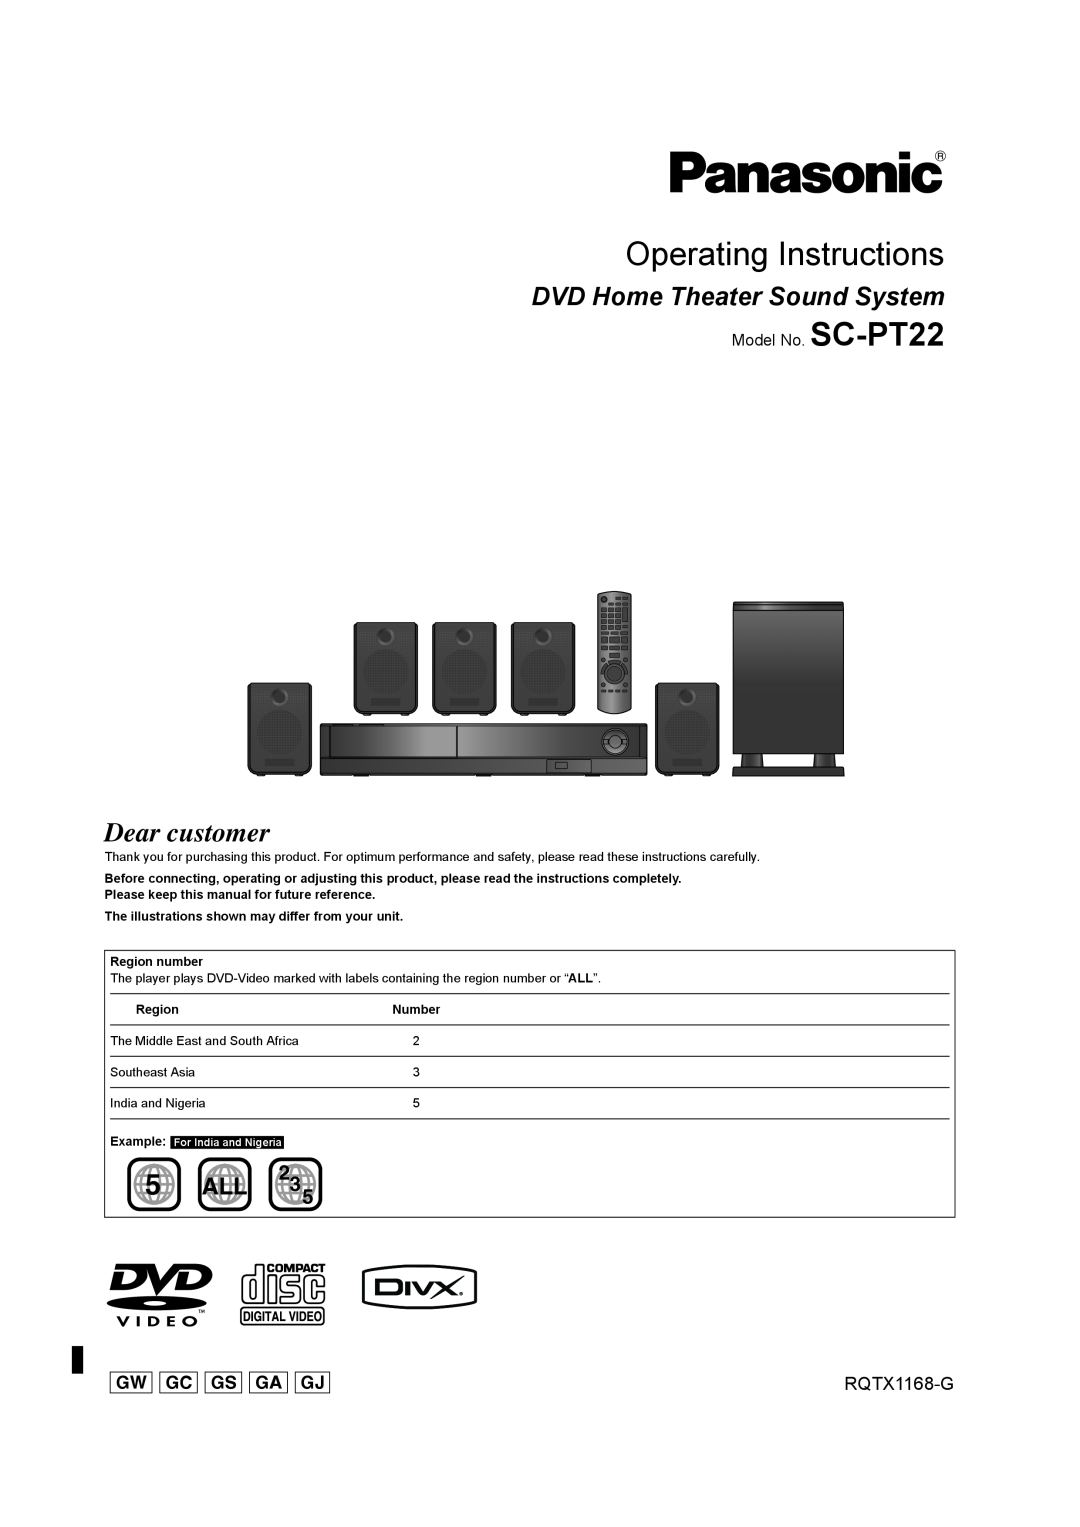 Panasonic SC-PT22 manual Gw Gc Gs Ga Gj, RQTX1168-G, Operating Instructions, Dear customer, DVD Home Theater Sound System 